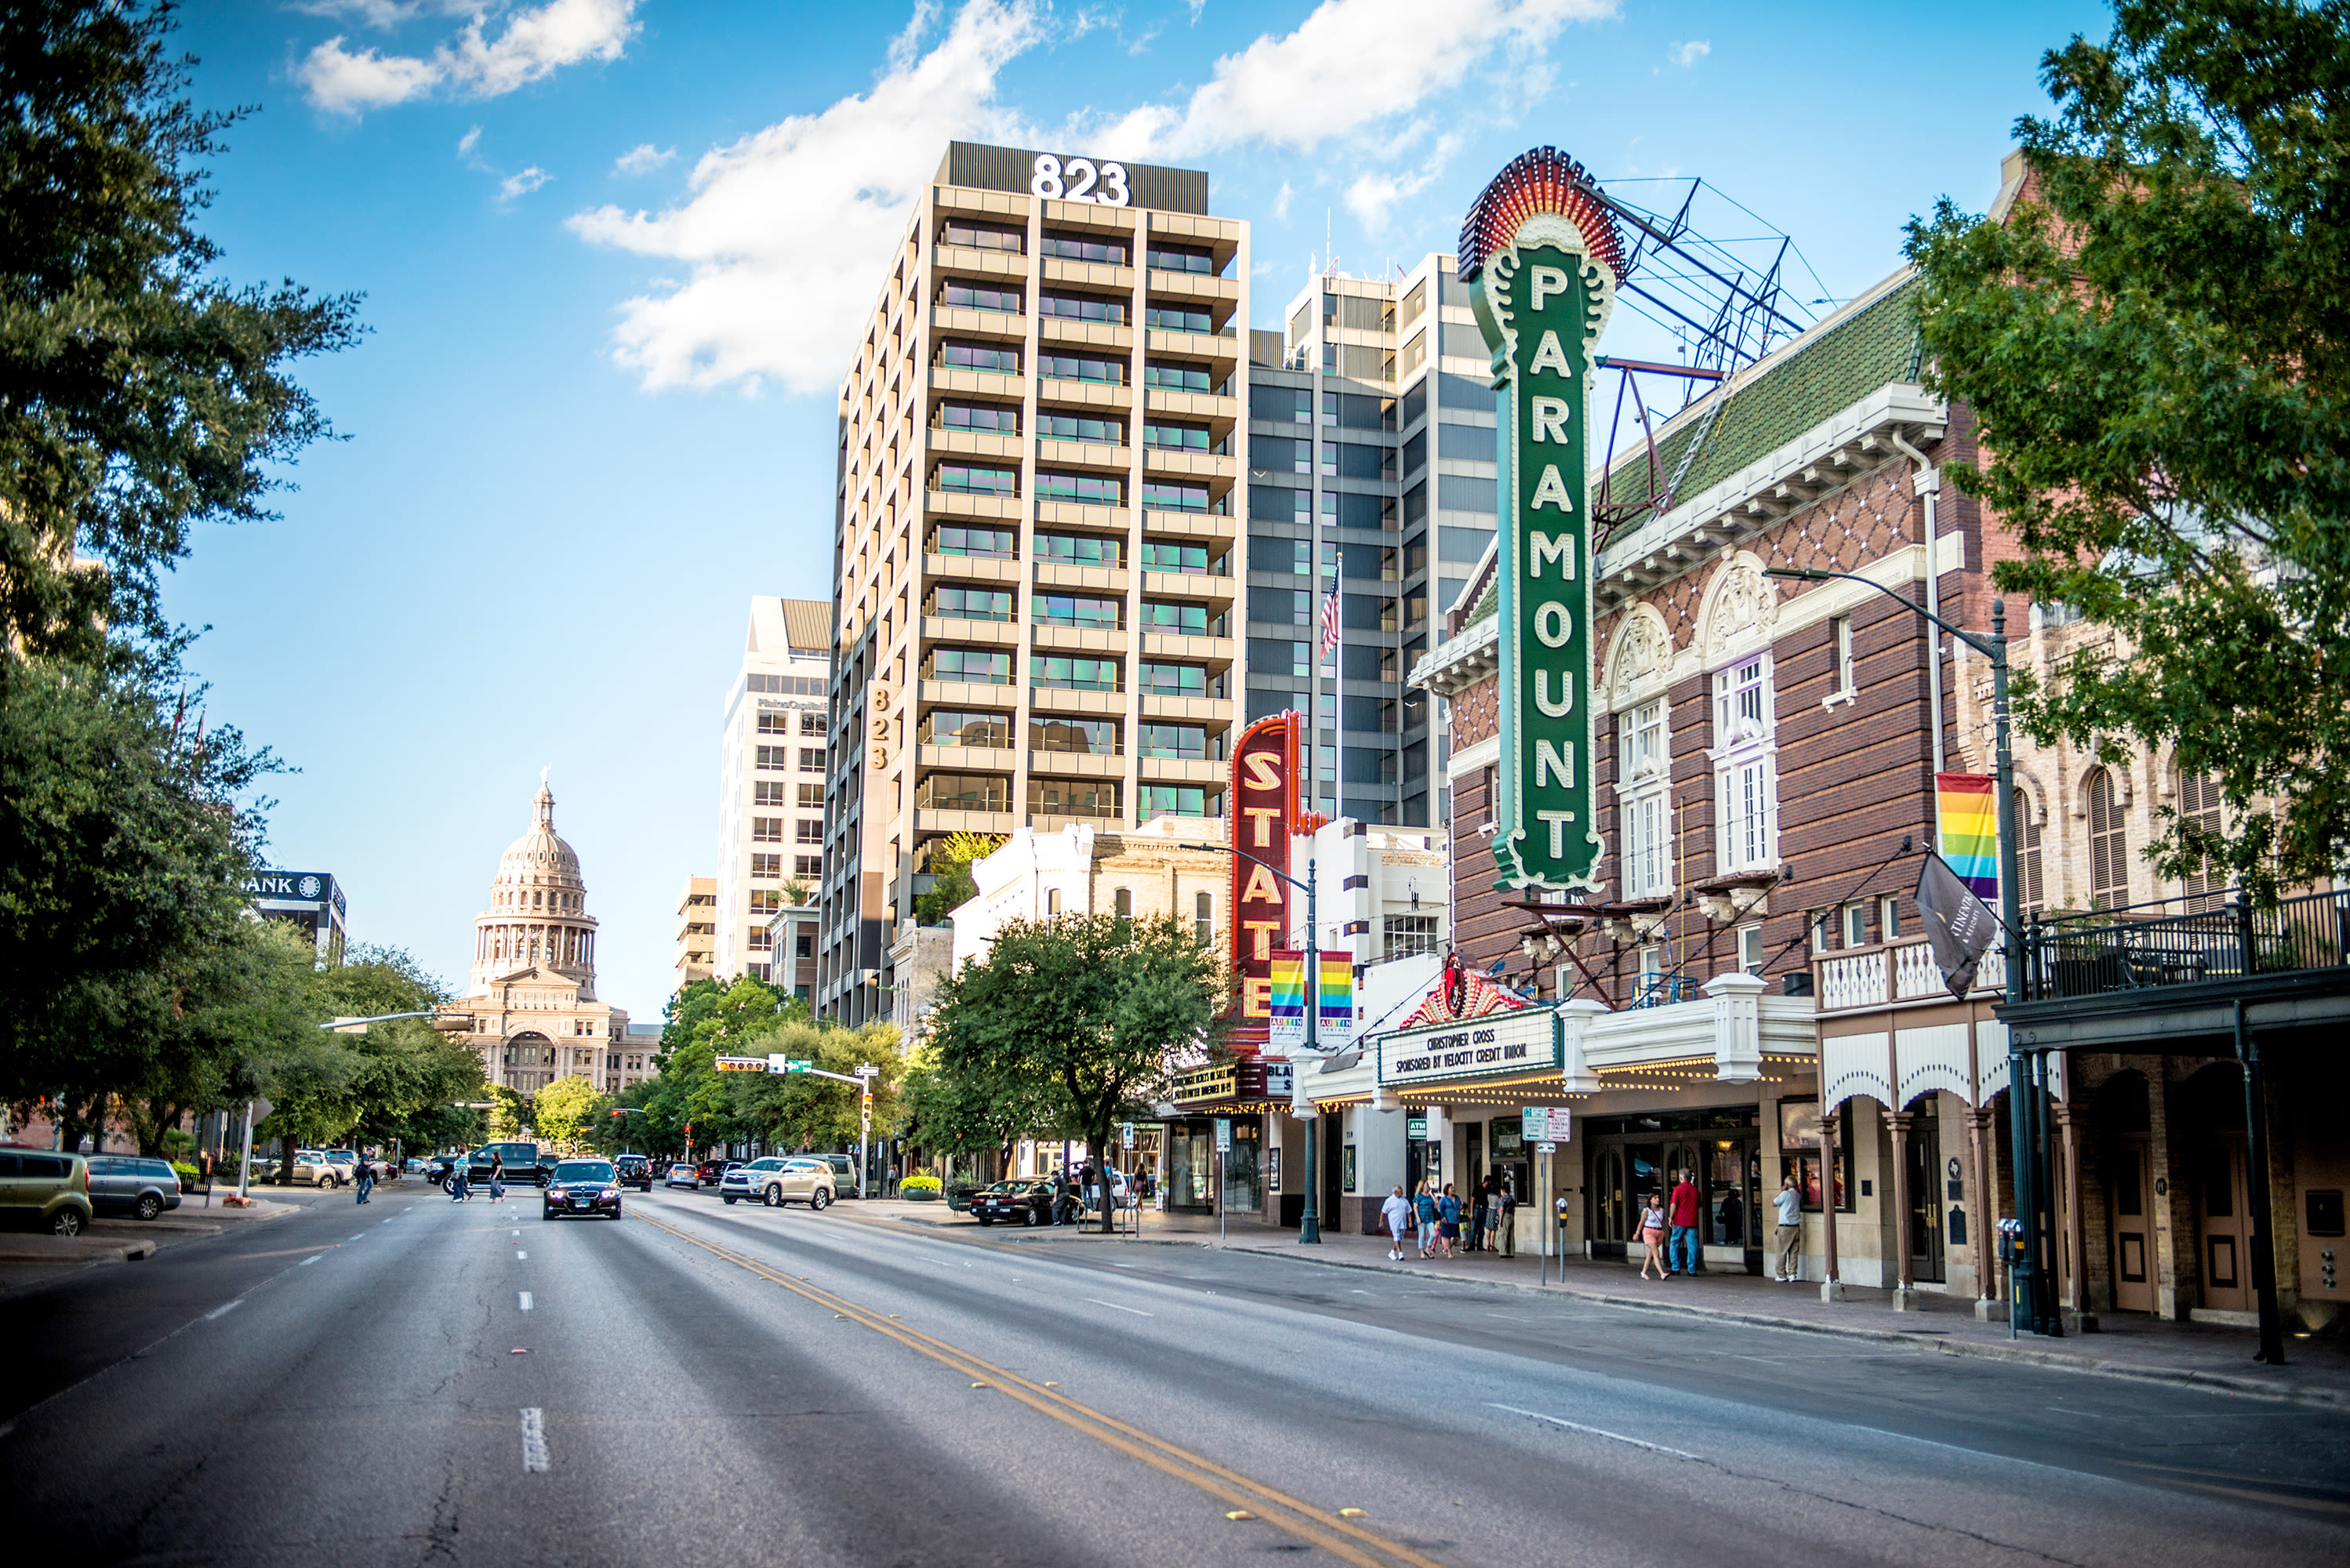 Congress Avenue and Paramount Theatre in Austin, Texas